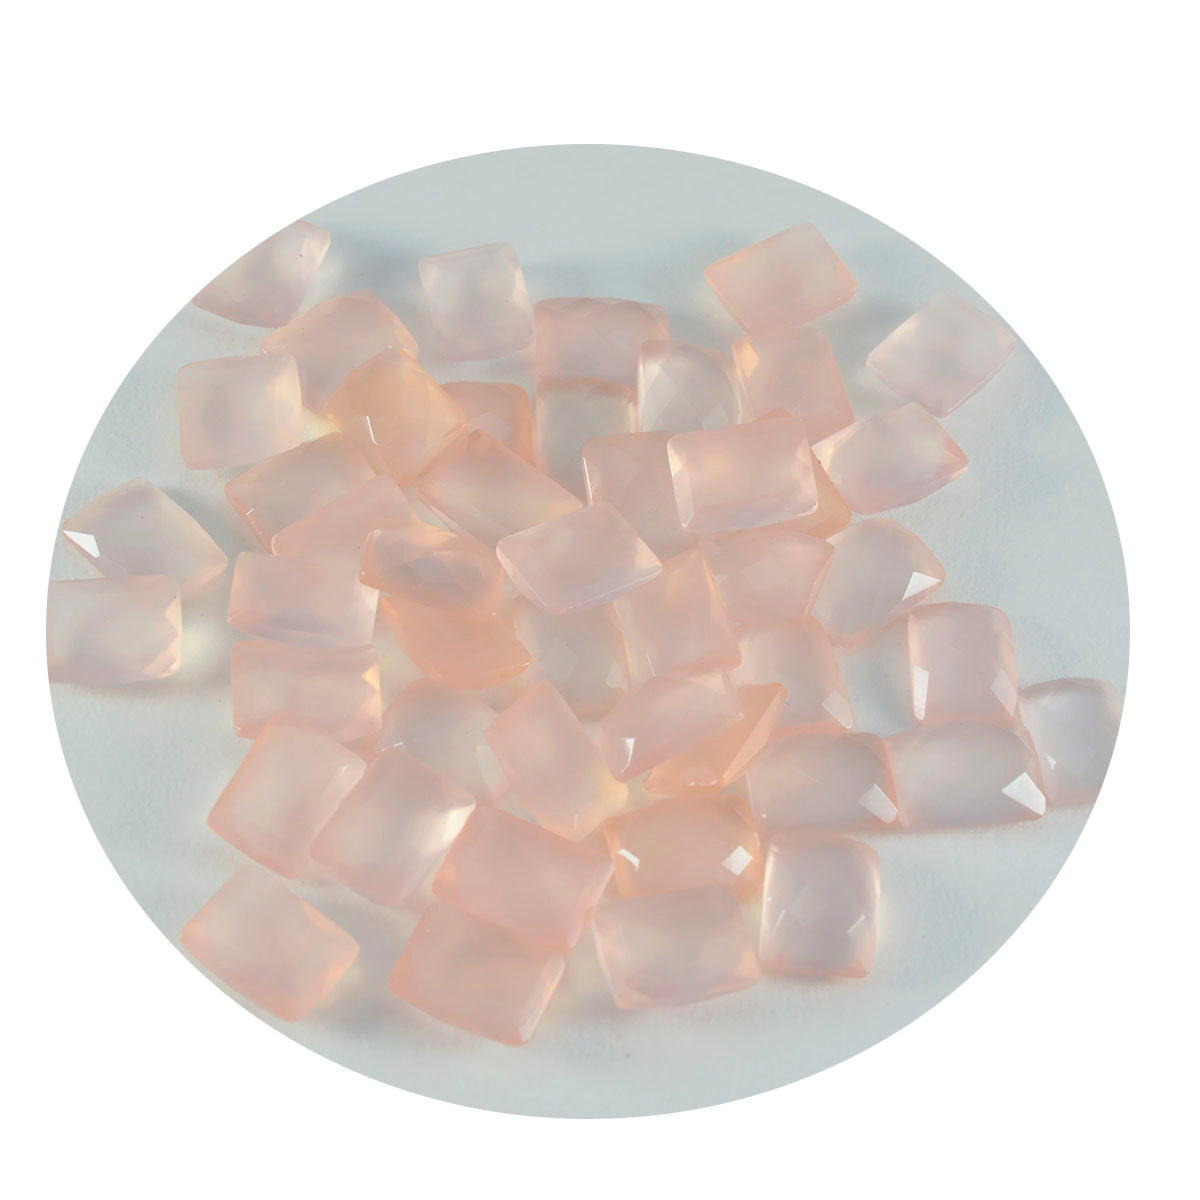 Riyogems 1PC Pink Rose Quartz Faceted 3x5 mm Octagon Shape wonderful Quality Gemstone